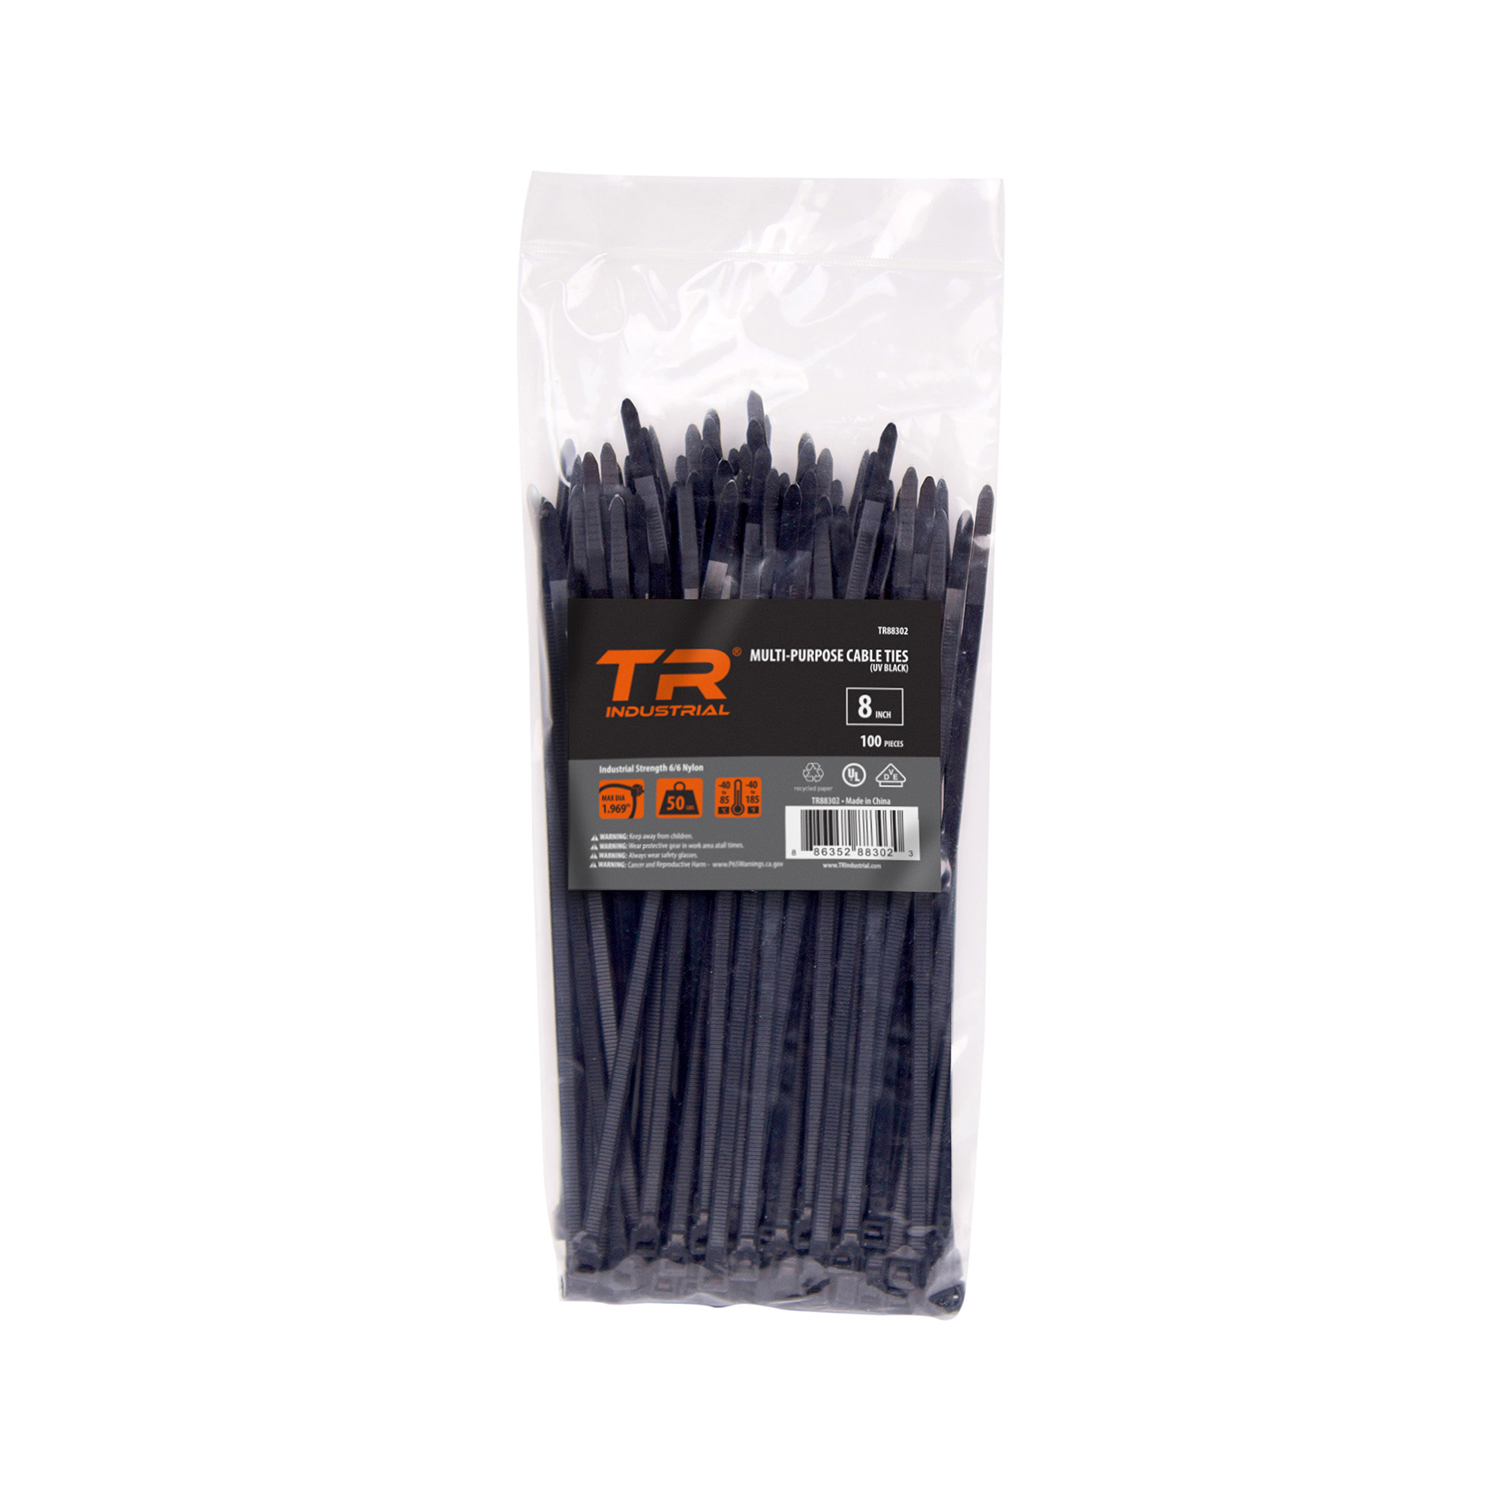 TR Industrial 88302 Multi-Purpose Cable Ties, 100pk, 8", Black - image 1 of 5